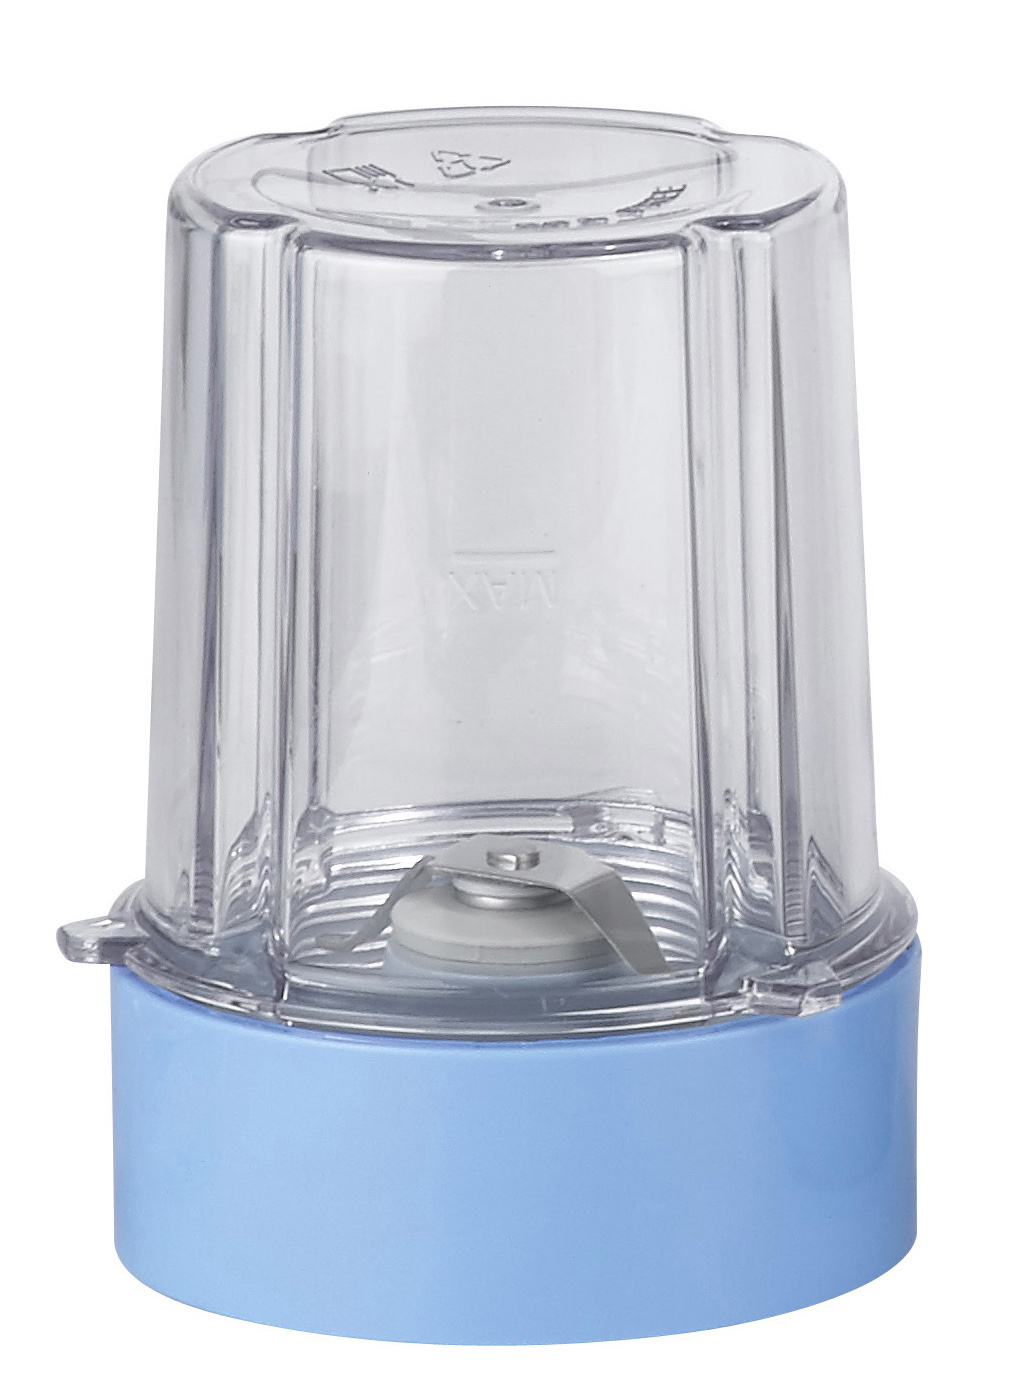 BLAUPUNKT TBP601BL Standmixer Watt, Liter) Blau/Grau 1.2 (700